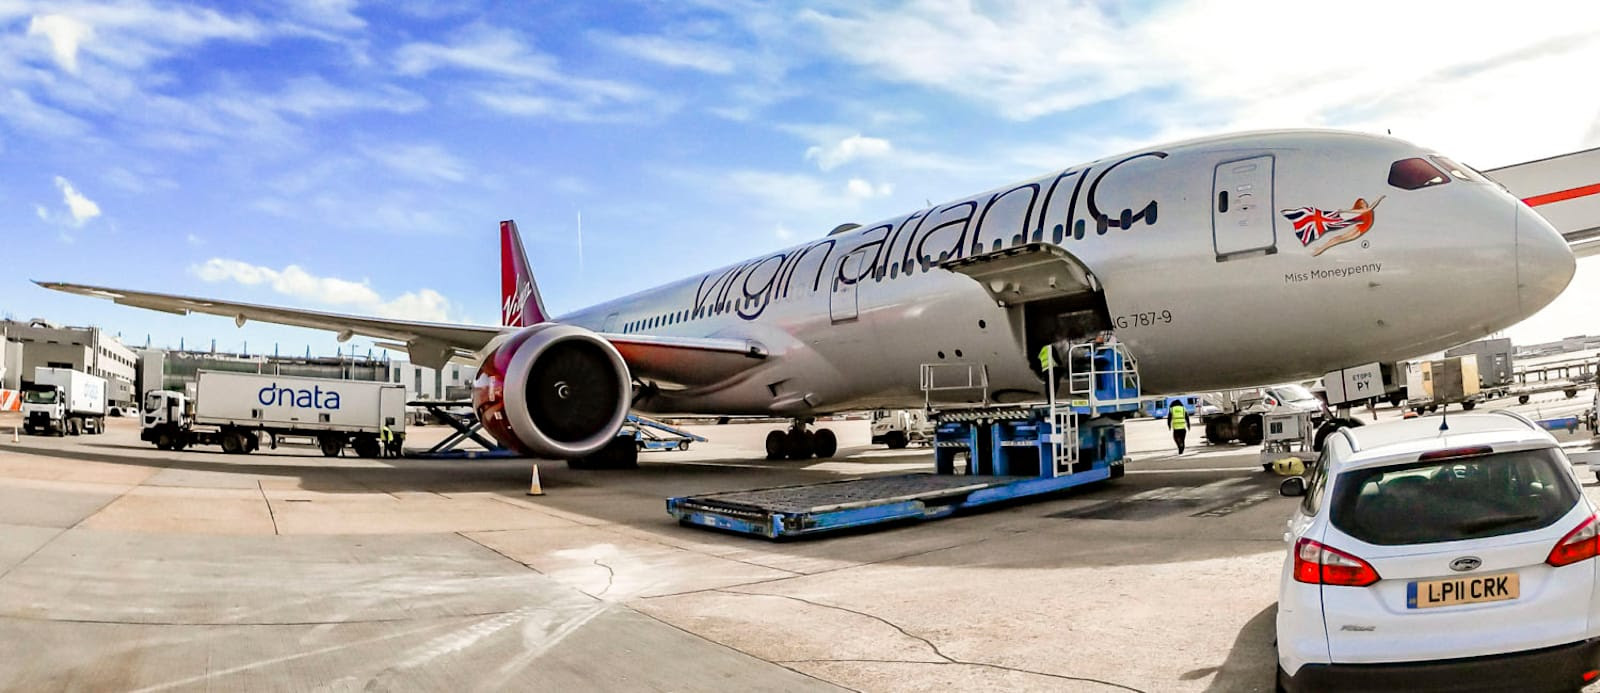 Virgin Atlantic Cargo Only Flights Deliver Medical Supplies Across The